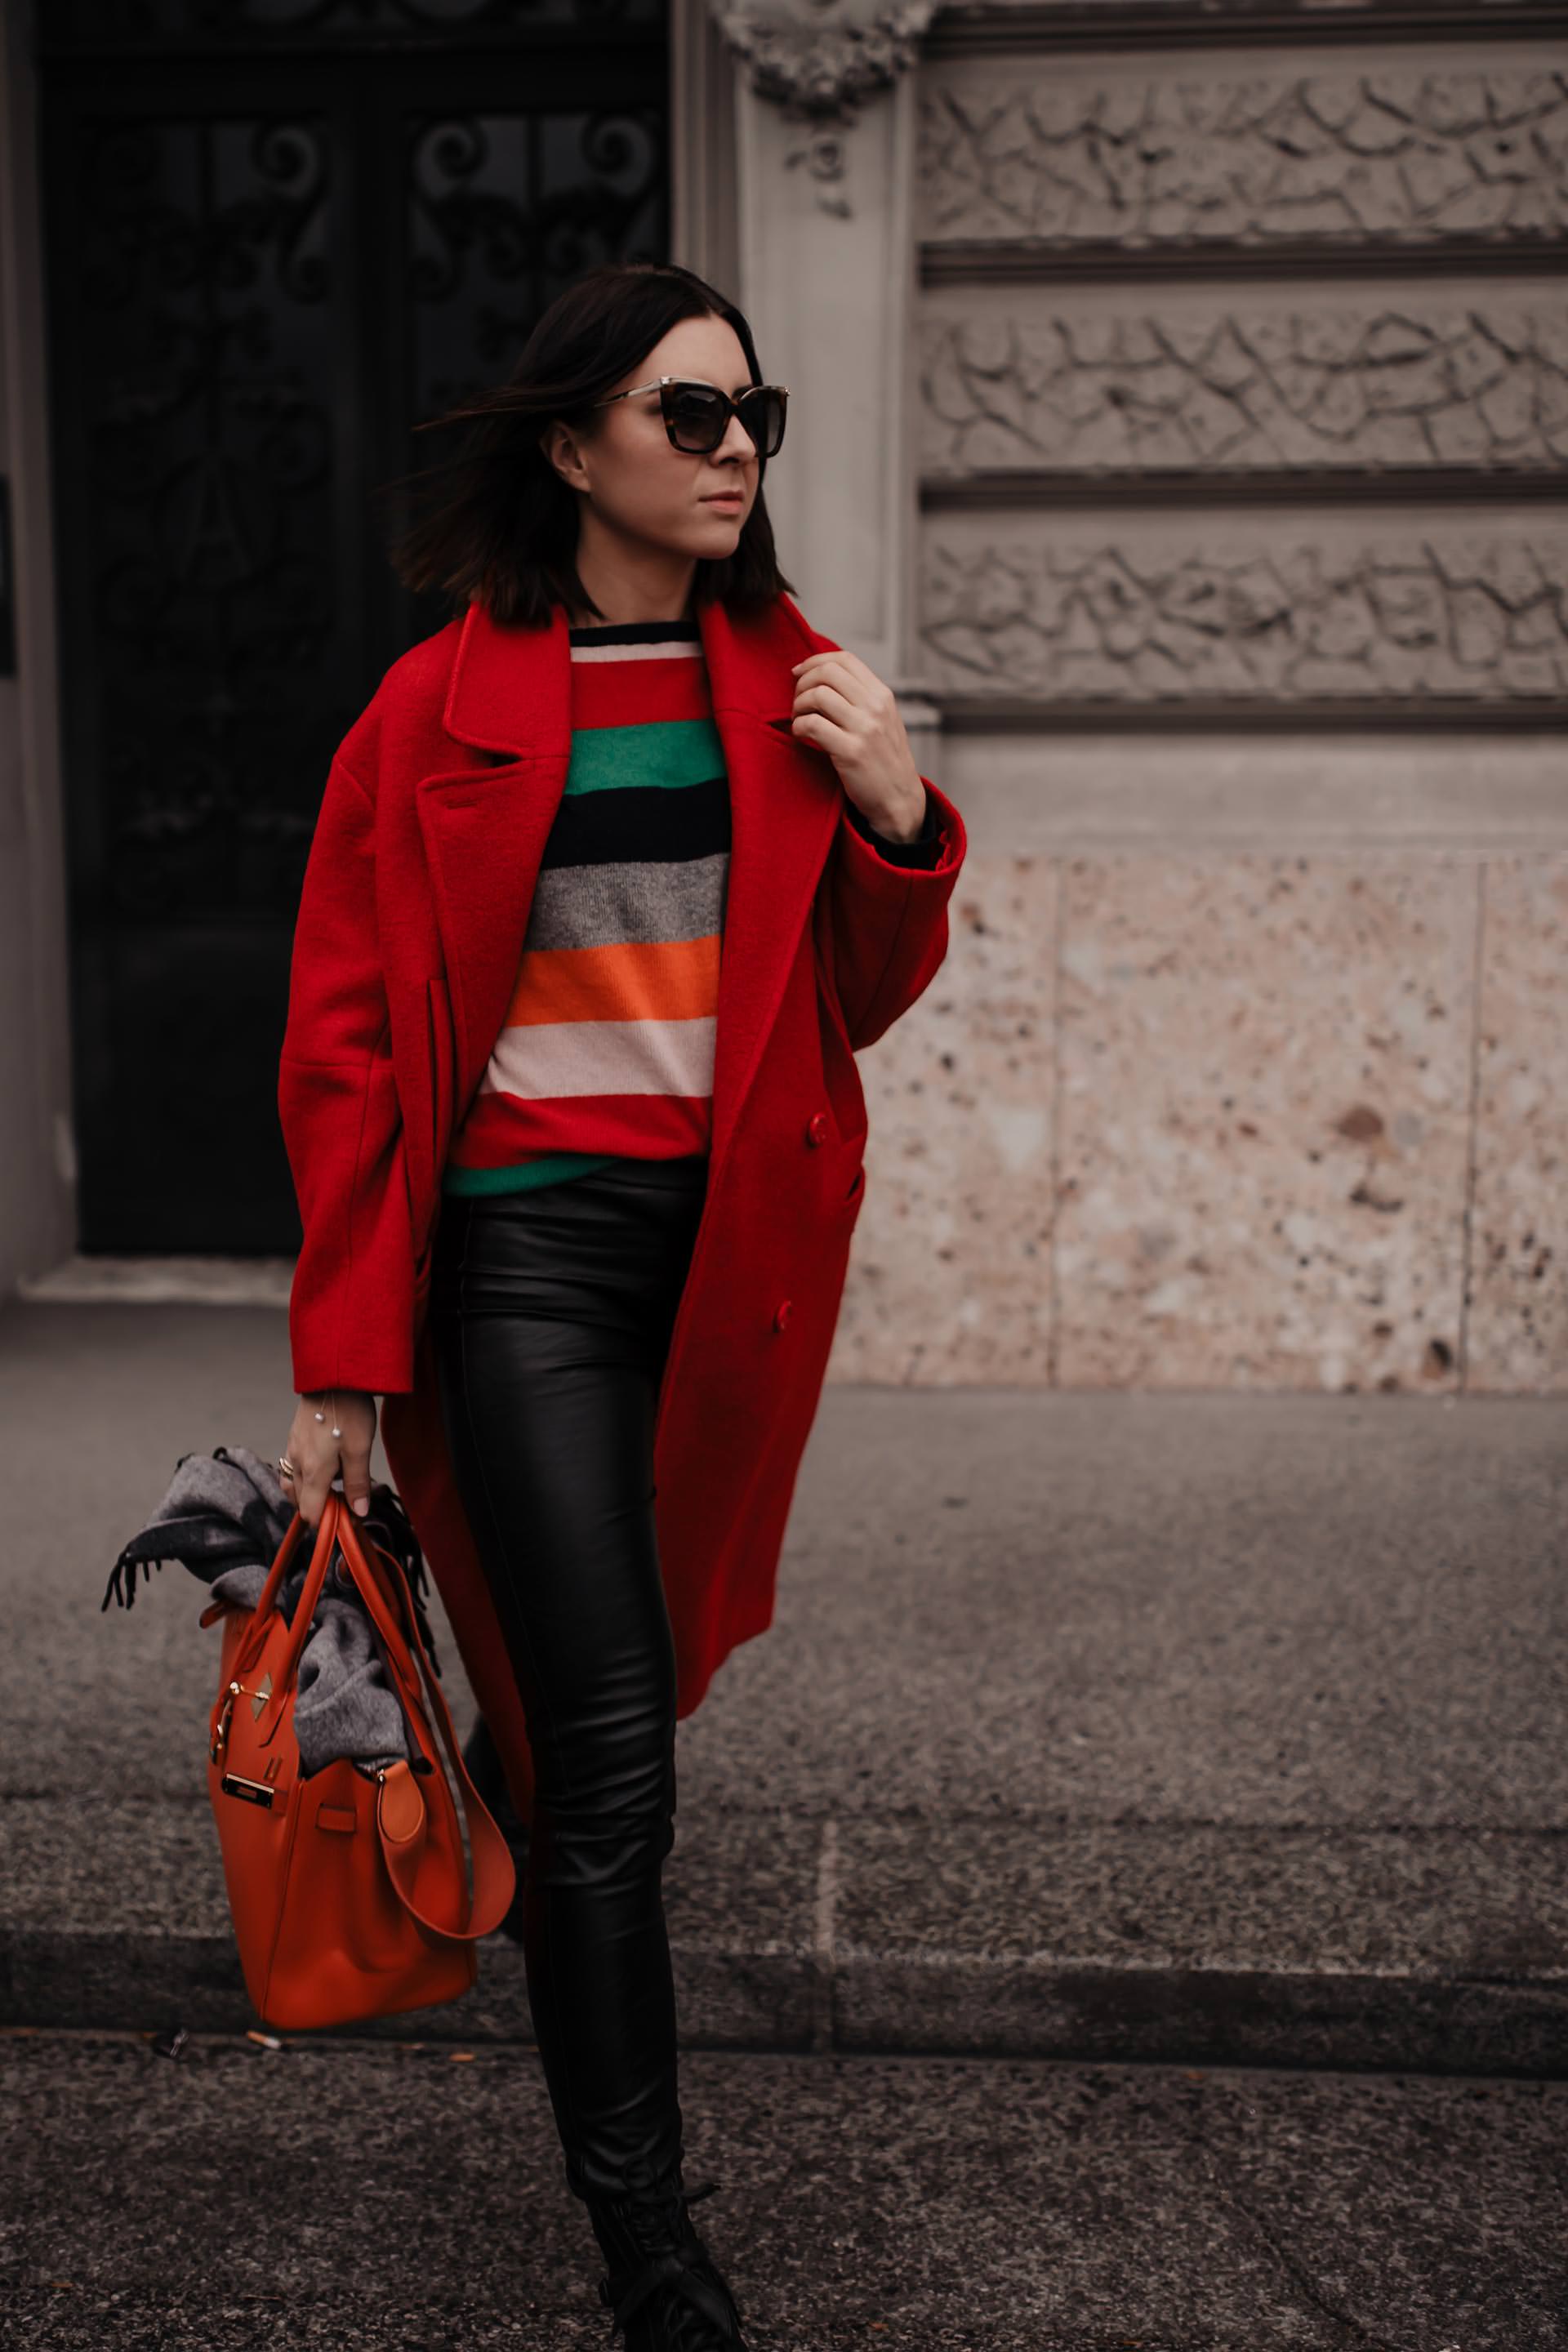 enthält unbeauftragte Werbung. roten Mantel kombinieren, roten Mantel stylen, roten Mantel kaufen, wie kombiniere ich meine Kleidung am besten, wie kombiniere ich einen roten mantel, rote mantel kombinieren, mantel im winter tragen, wintermantel outfit, roter wintermantel, Isabel Marant Lederhose,  Louis Vuitton boots, hermes birkin bag, Winter Outfit, Streetstyle, www.whoismocca.com #wintermantel #wintertrends #modetrends #winteroutfit #mantel #hermes #streetstyle